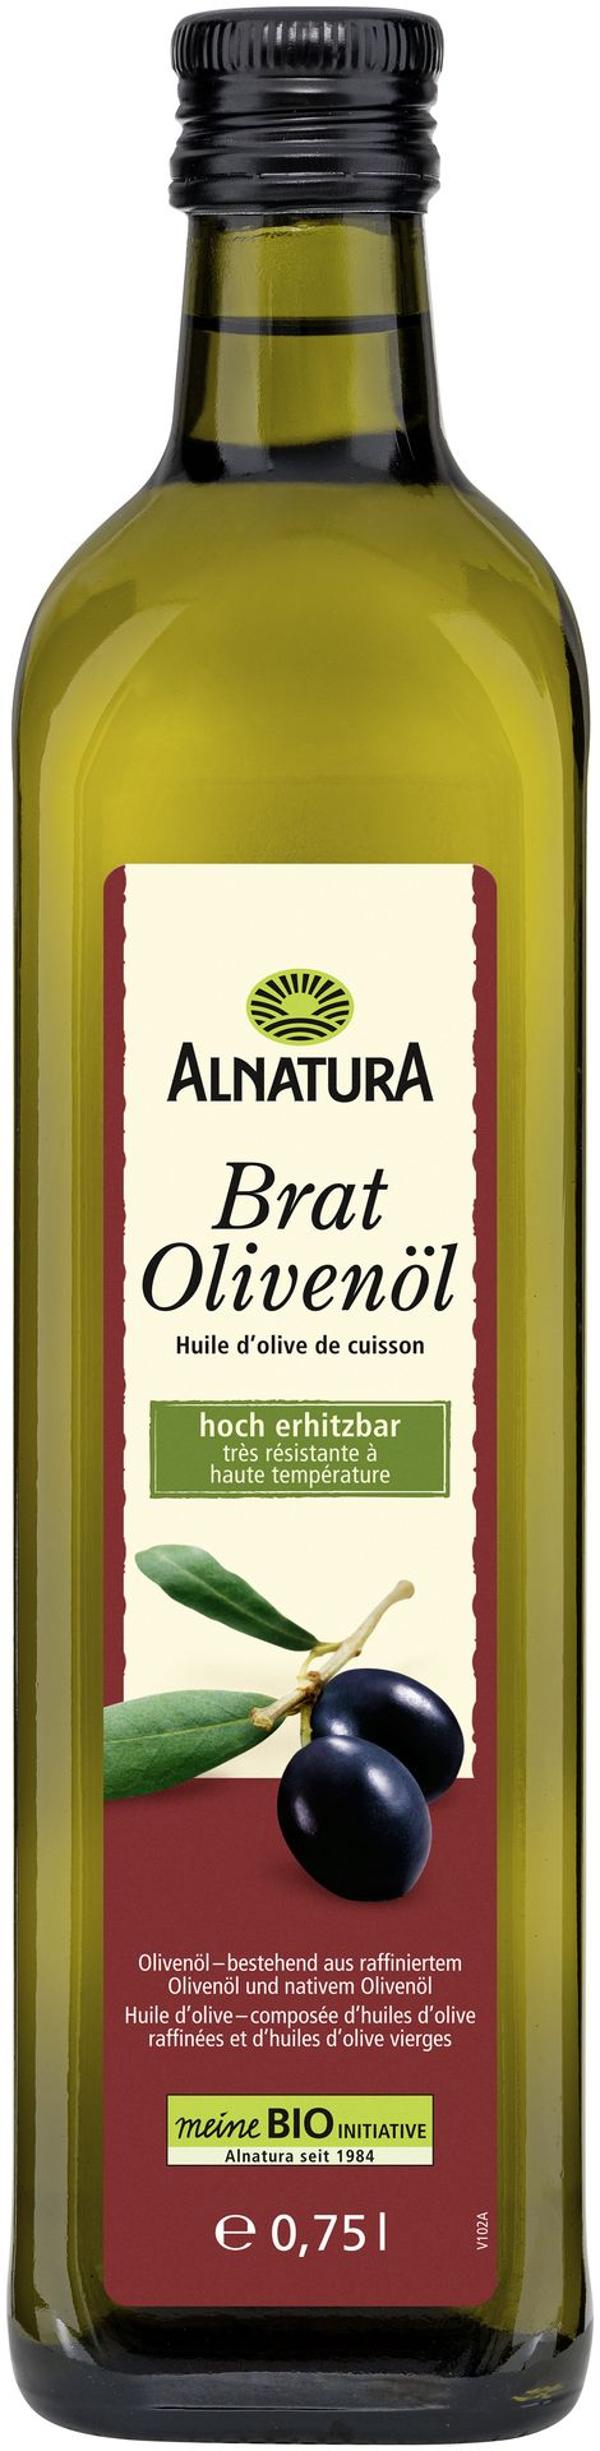 Produktfoto zu Brat Olivenöl 750 ml Alnatura